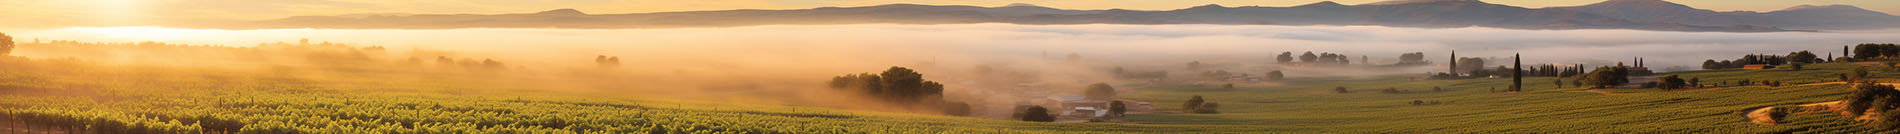 Wine region in Burgenland in Austria